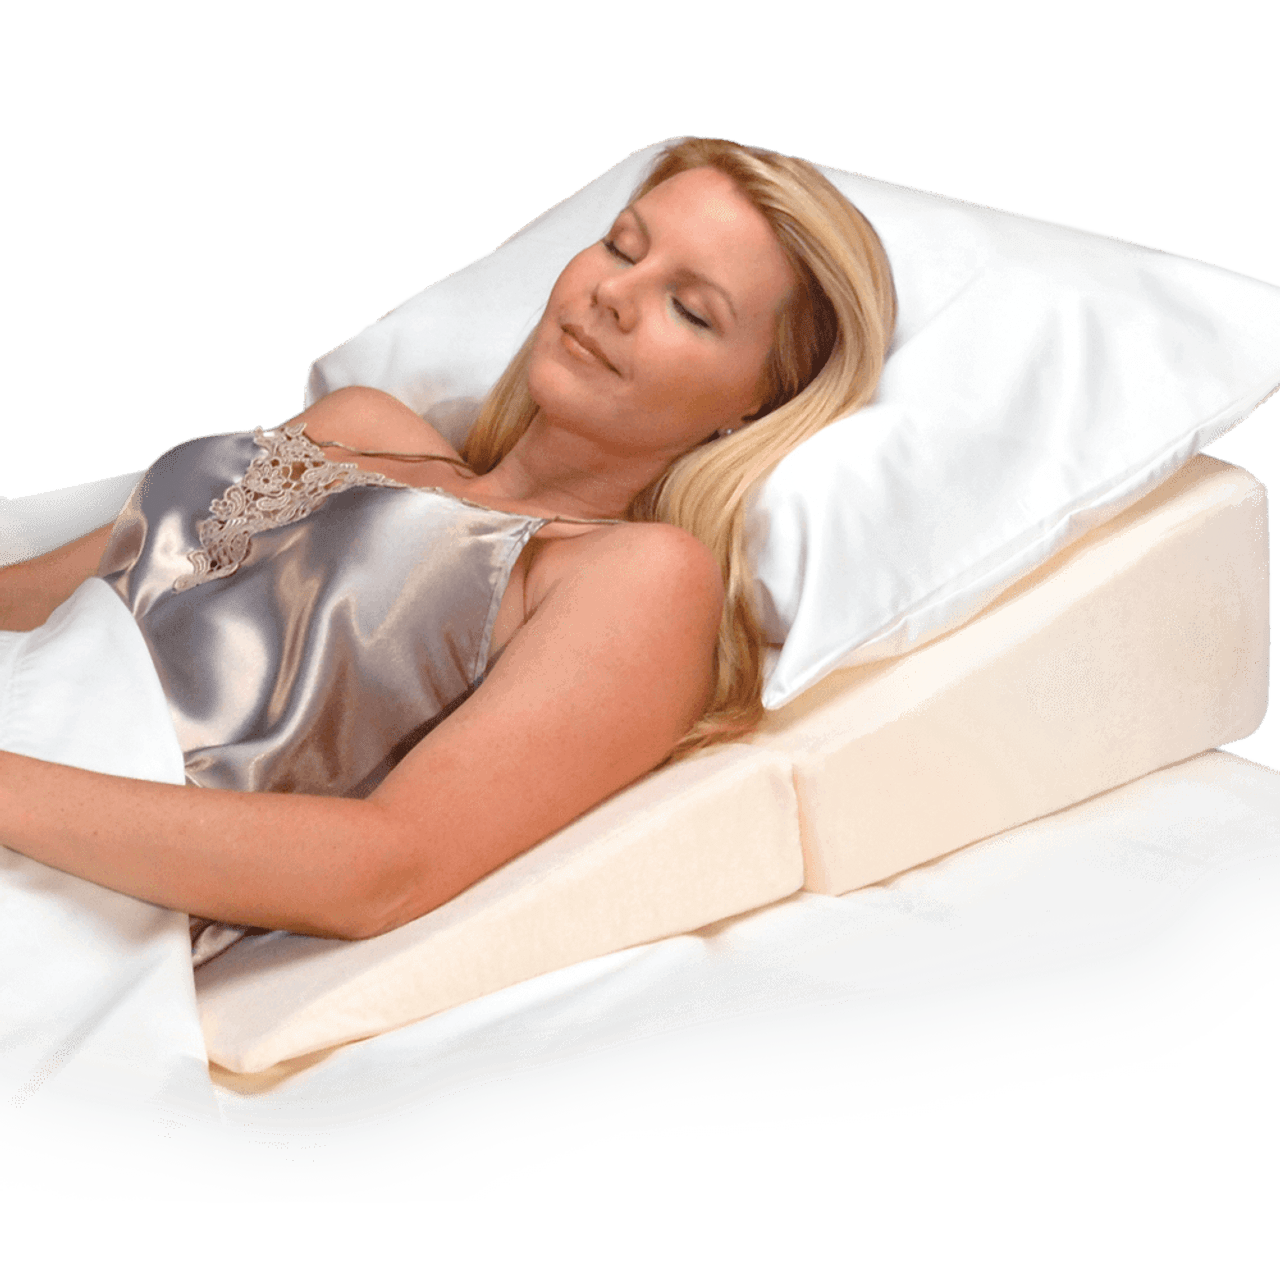 Leg Wedge Pillows for Sale - Dual Purpose Better Sleep Pillow